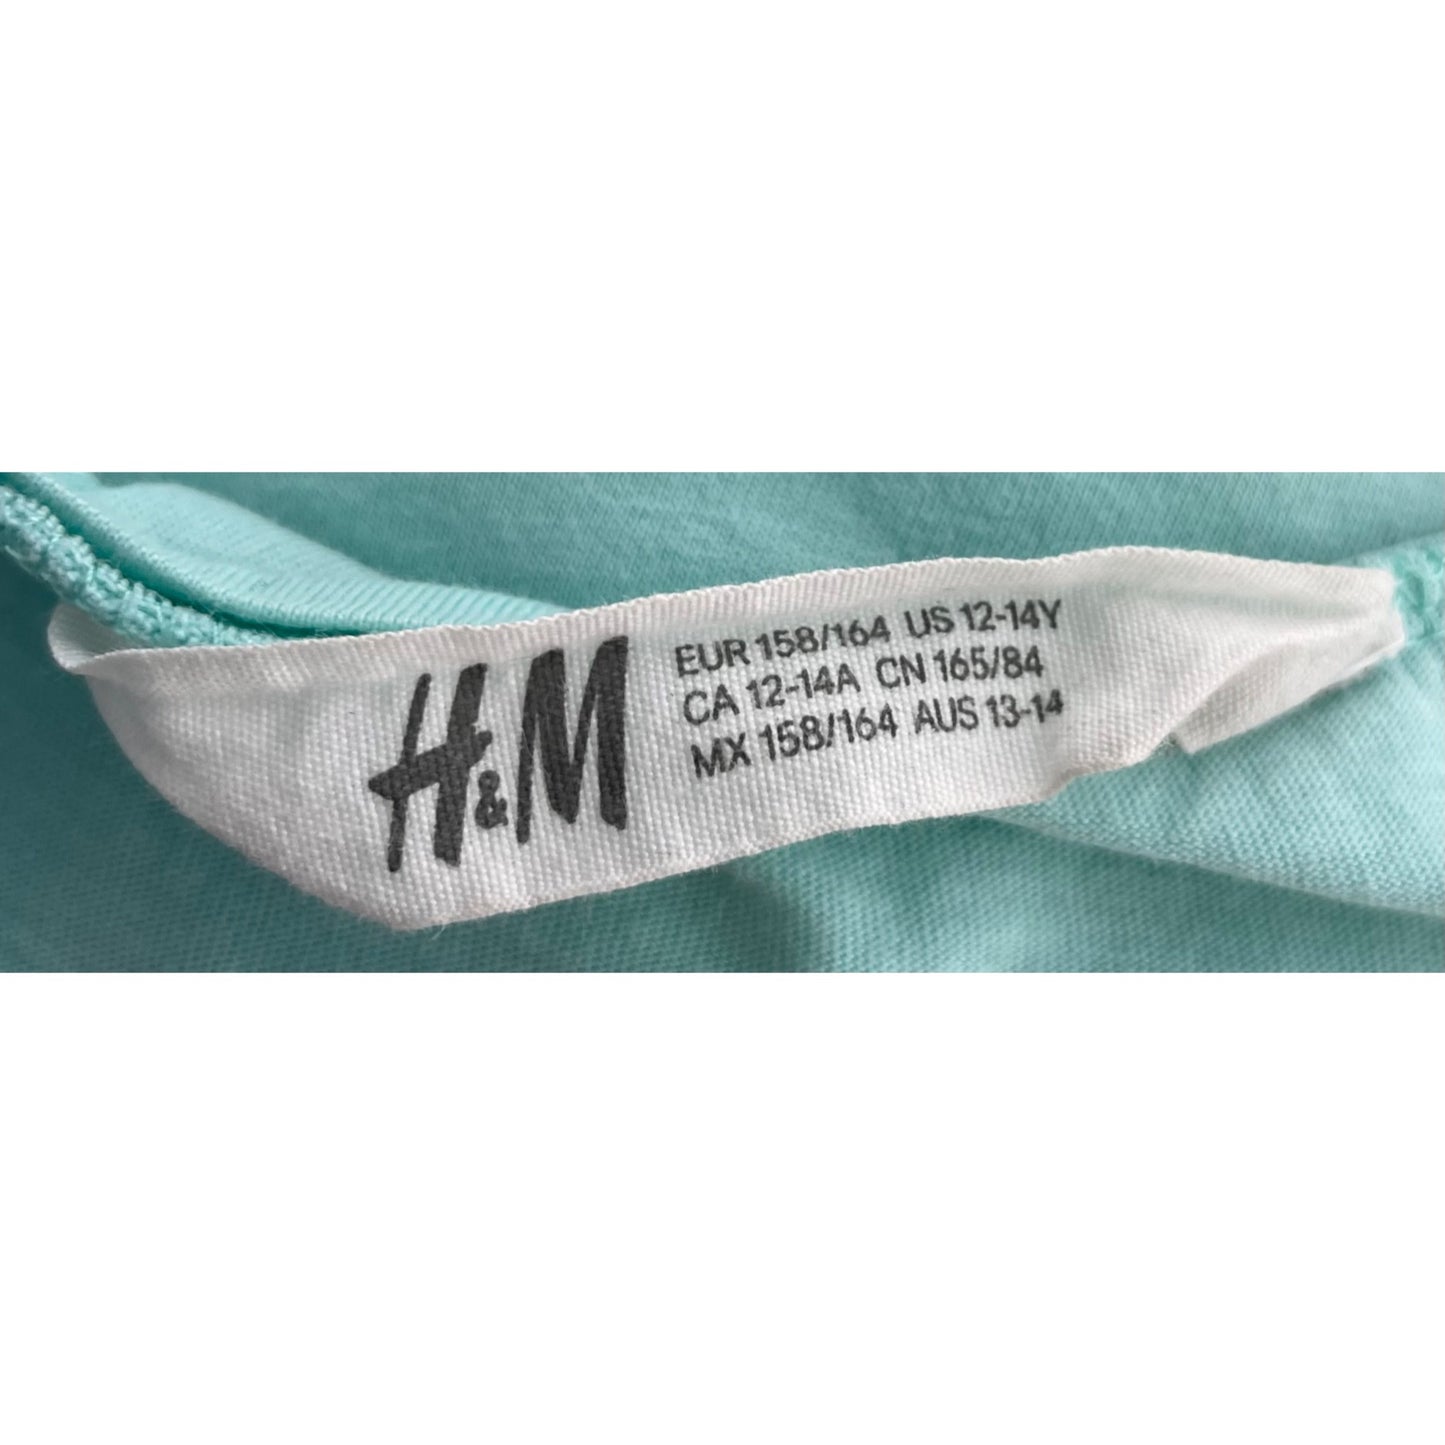 H&M Girl's Size 12-14 Aqua Blue/Navy/White "Good Days Ahead" Graphic Tank Top